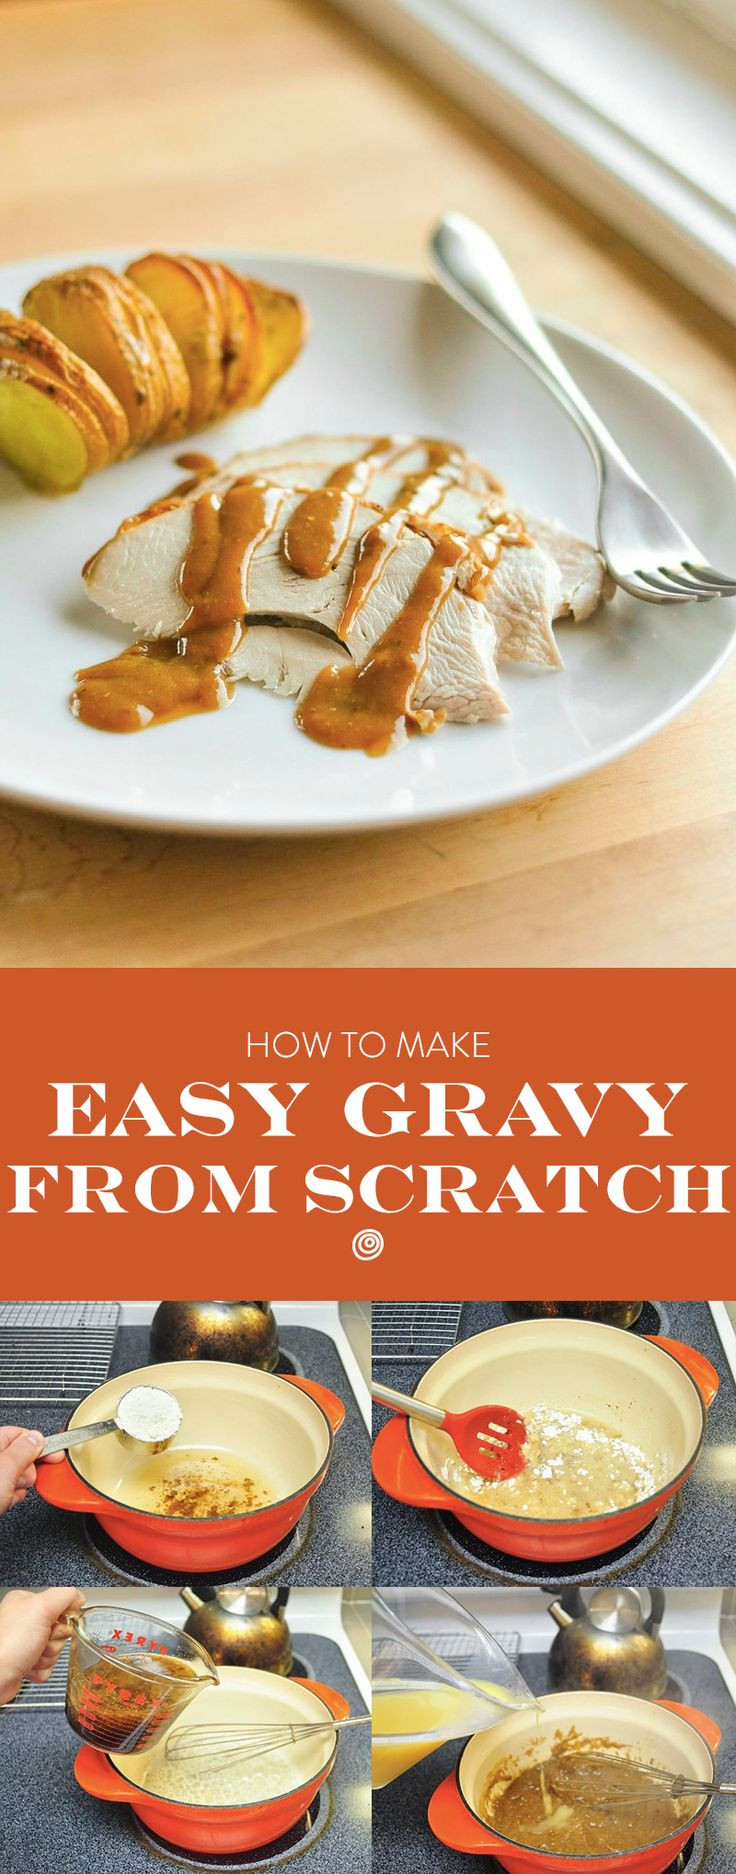 How To Make Turkey Gravy From Drippings
 How To Make an Easy Turkey Gravy Recipe